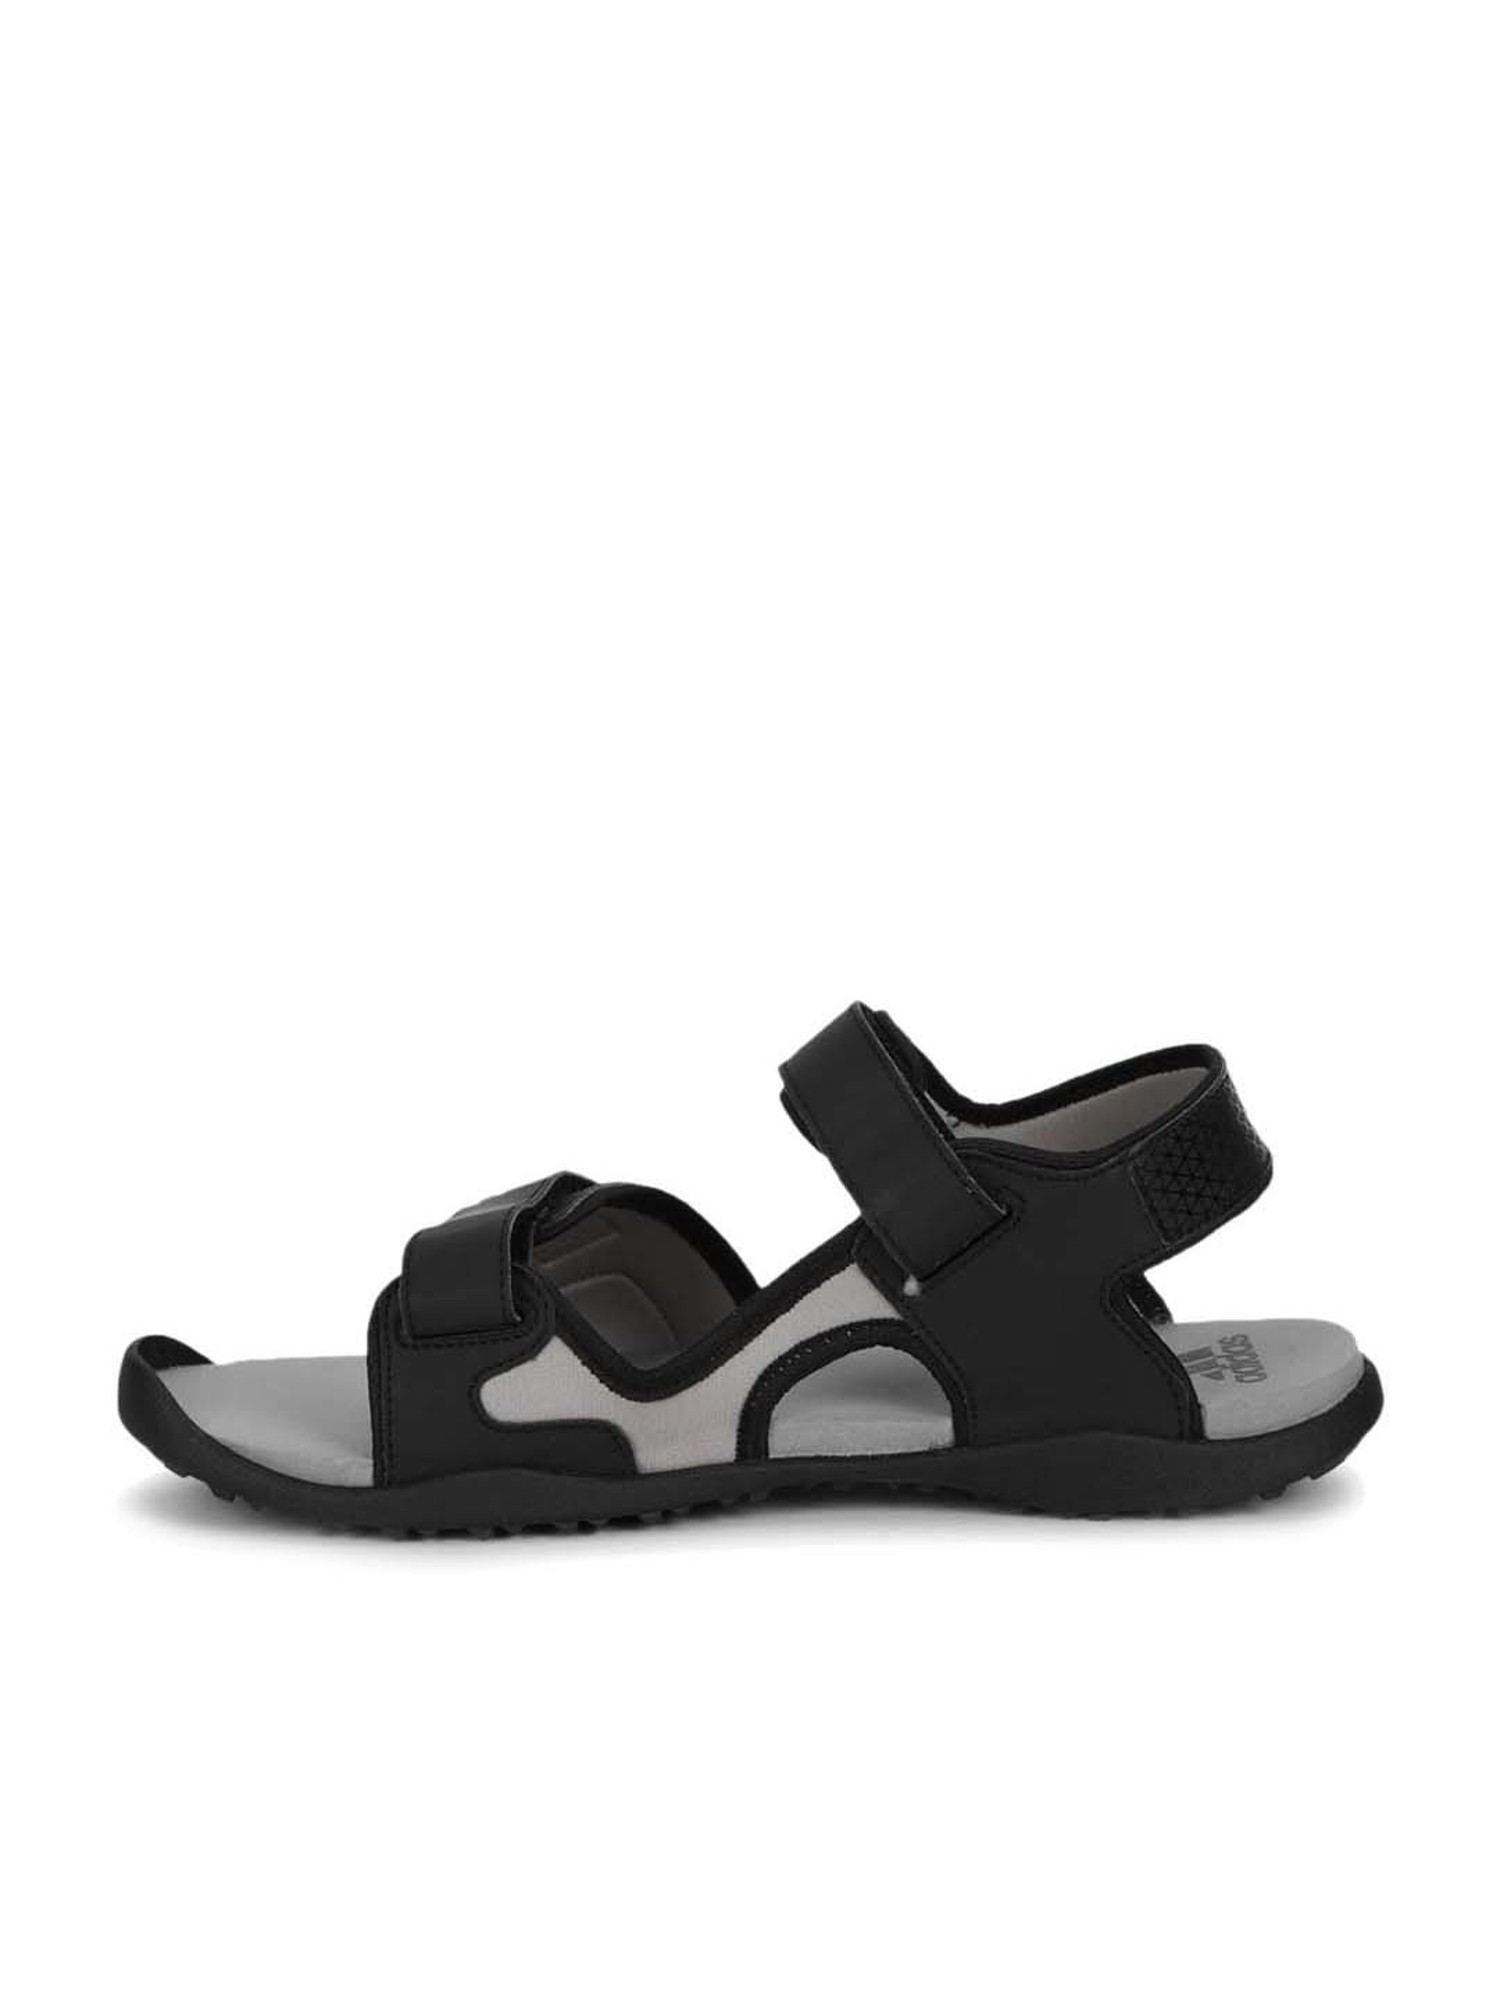 Buy Black Sandals for Men by ADIDAS Online | Ajio.com